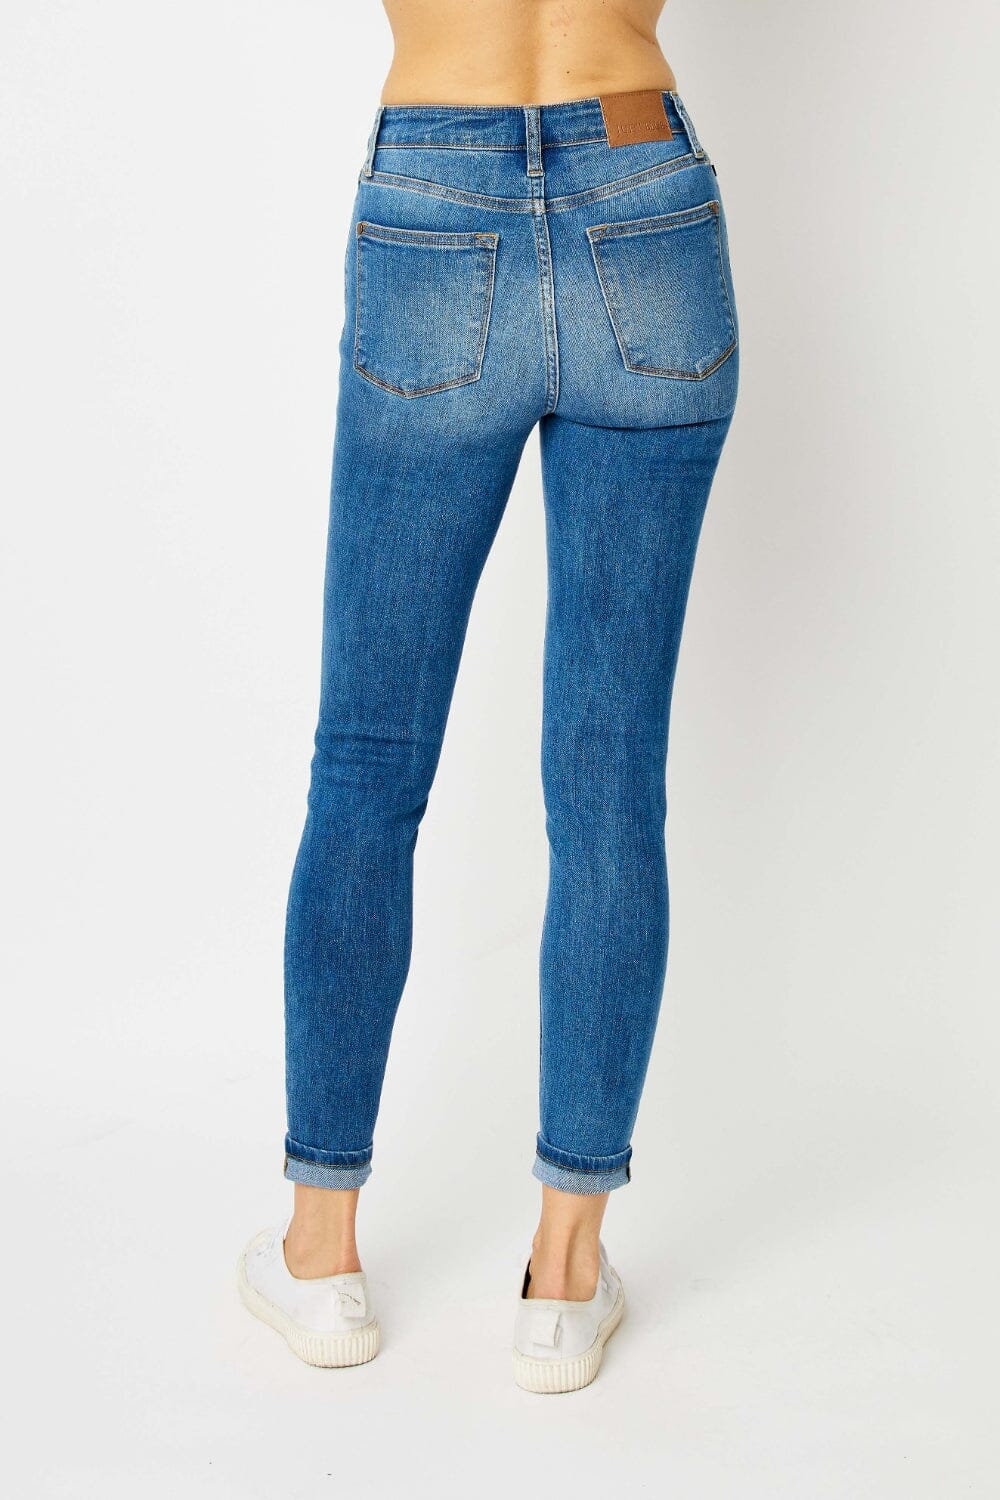 Judy Blue Medium Blue Cuffed Hem Skinny Jeans jeans jehouze 